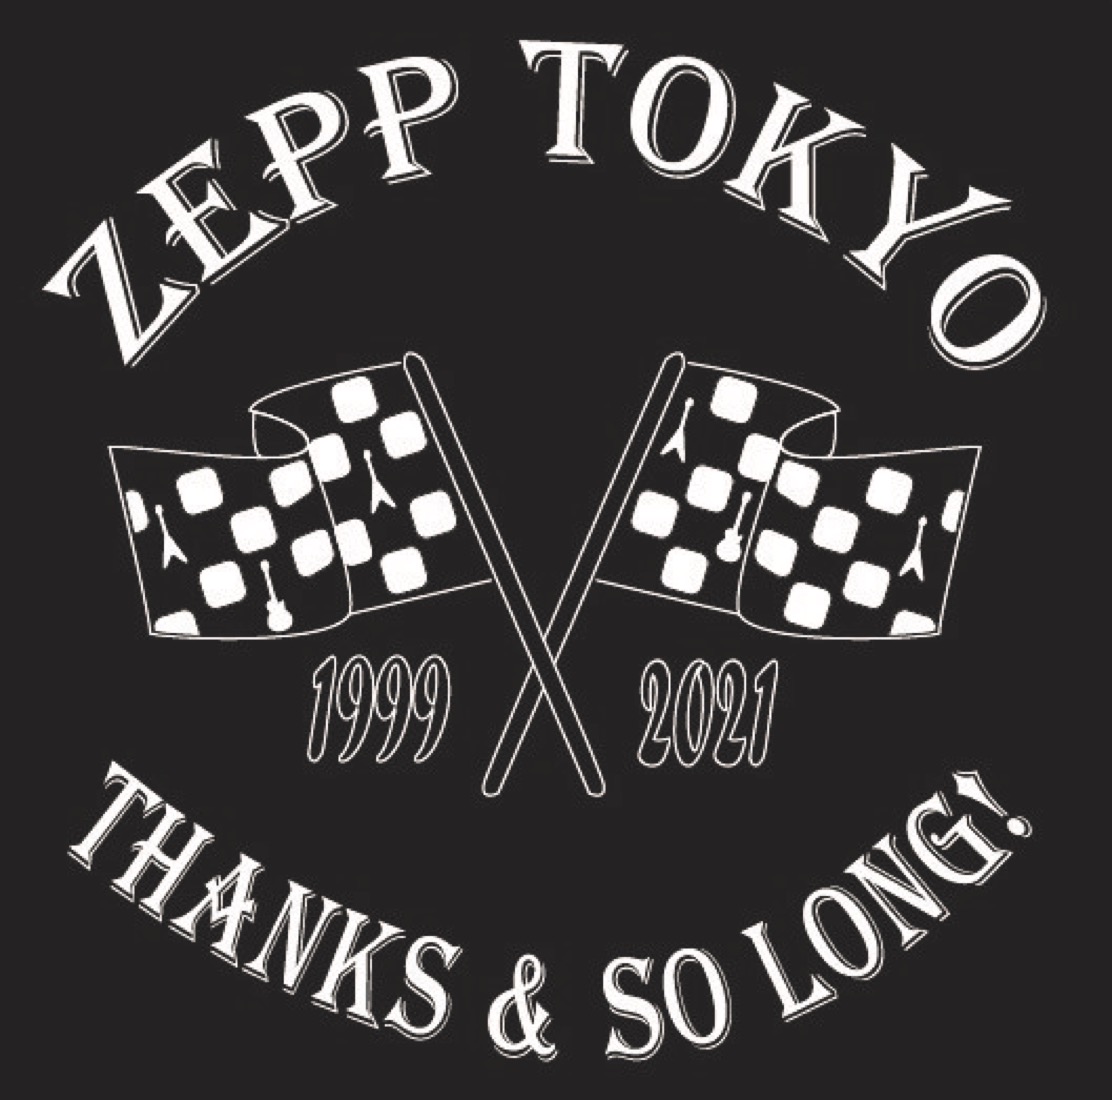 Zepp Tokyoファイナルイベント最終日は “ELLEGARDEN vs BRAHMAN”